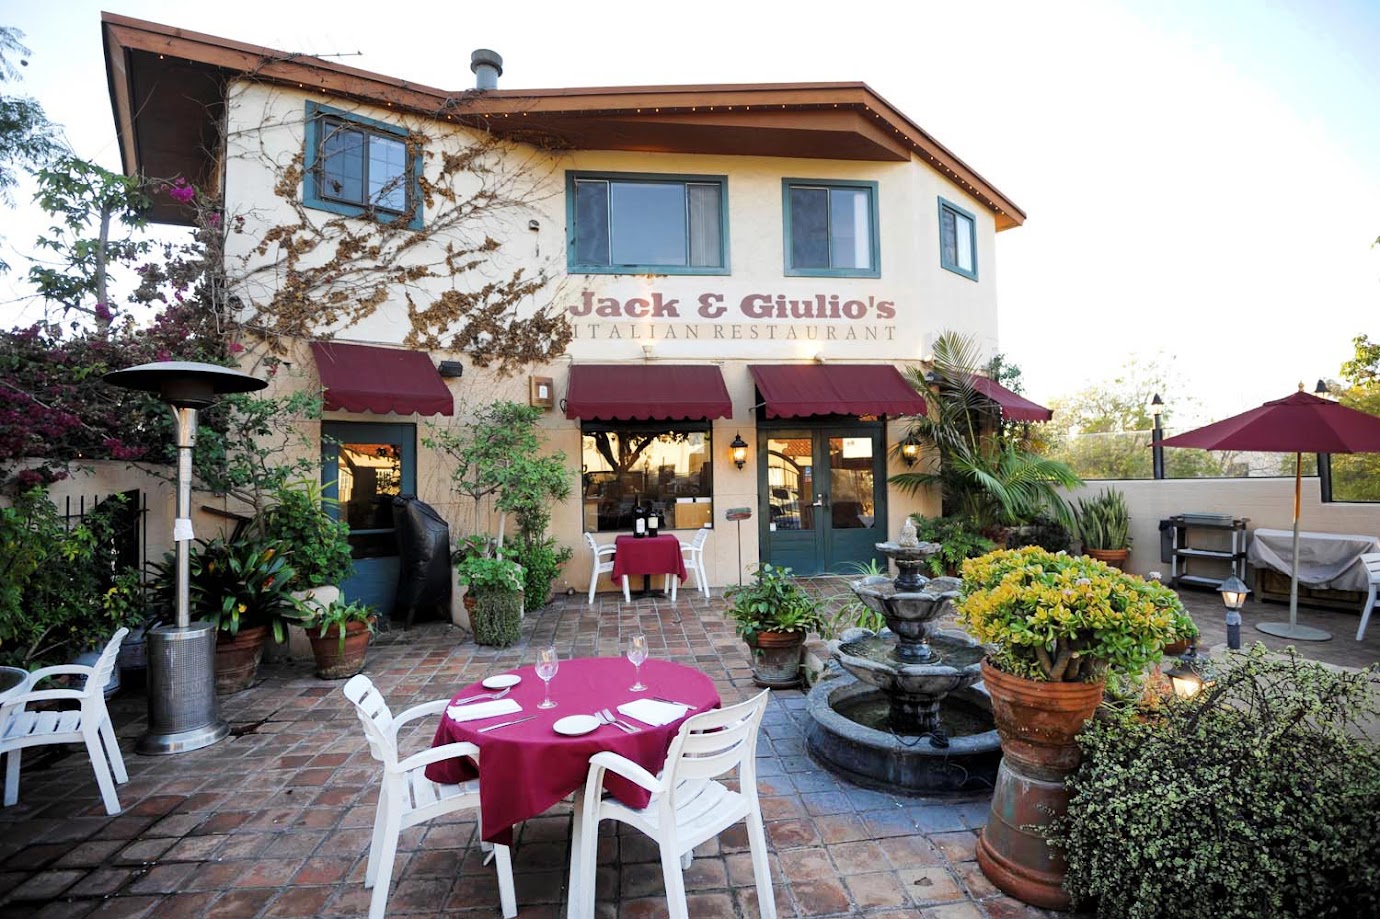 Jack & Giulio's Italian Restaurant